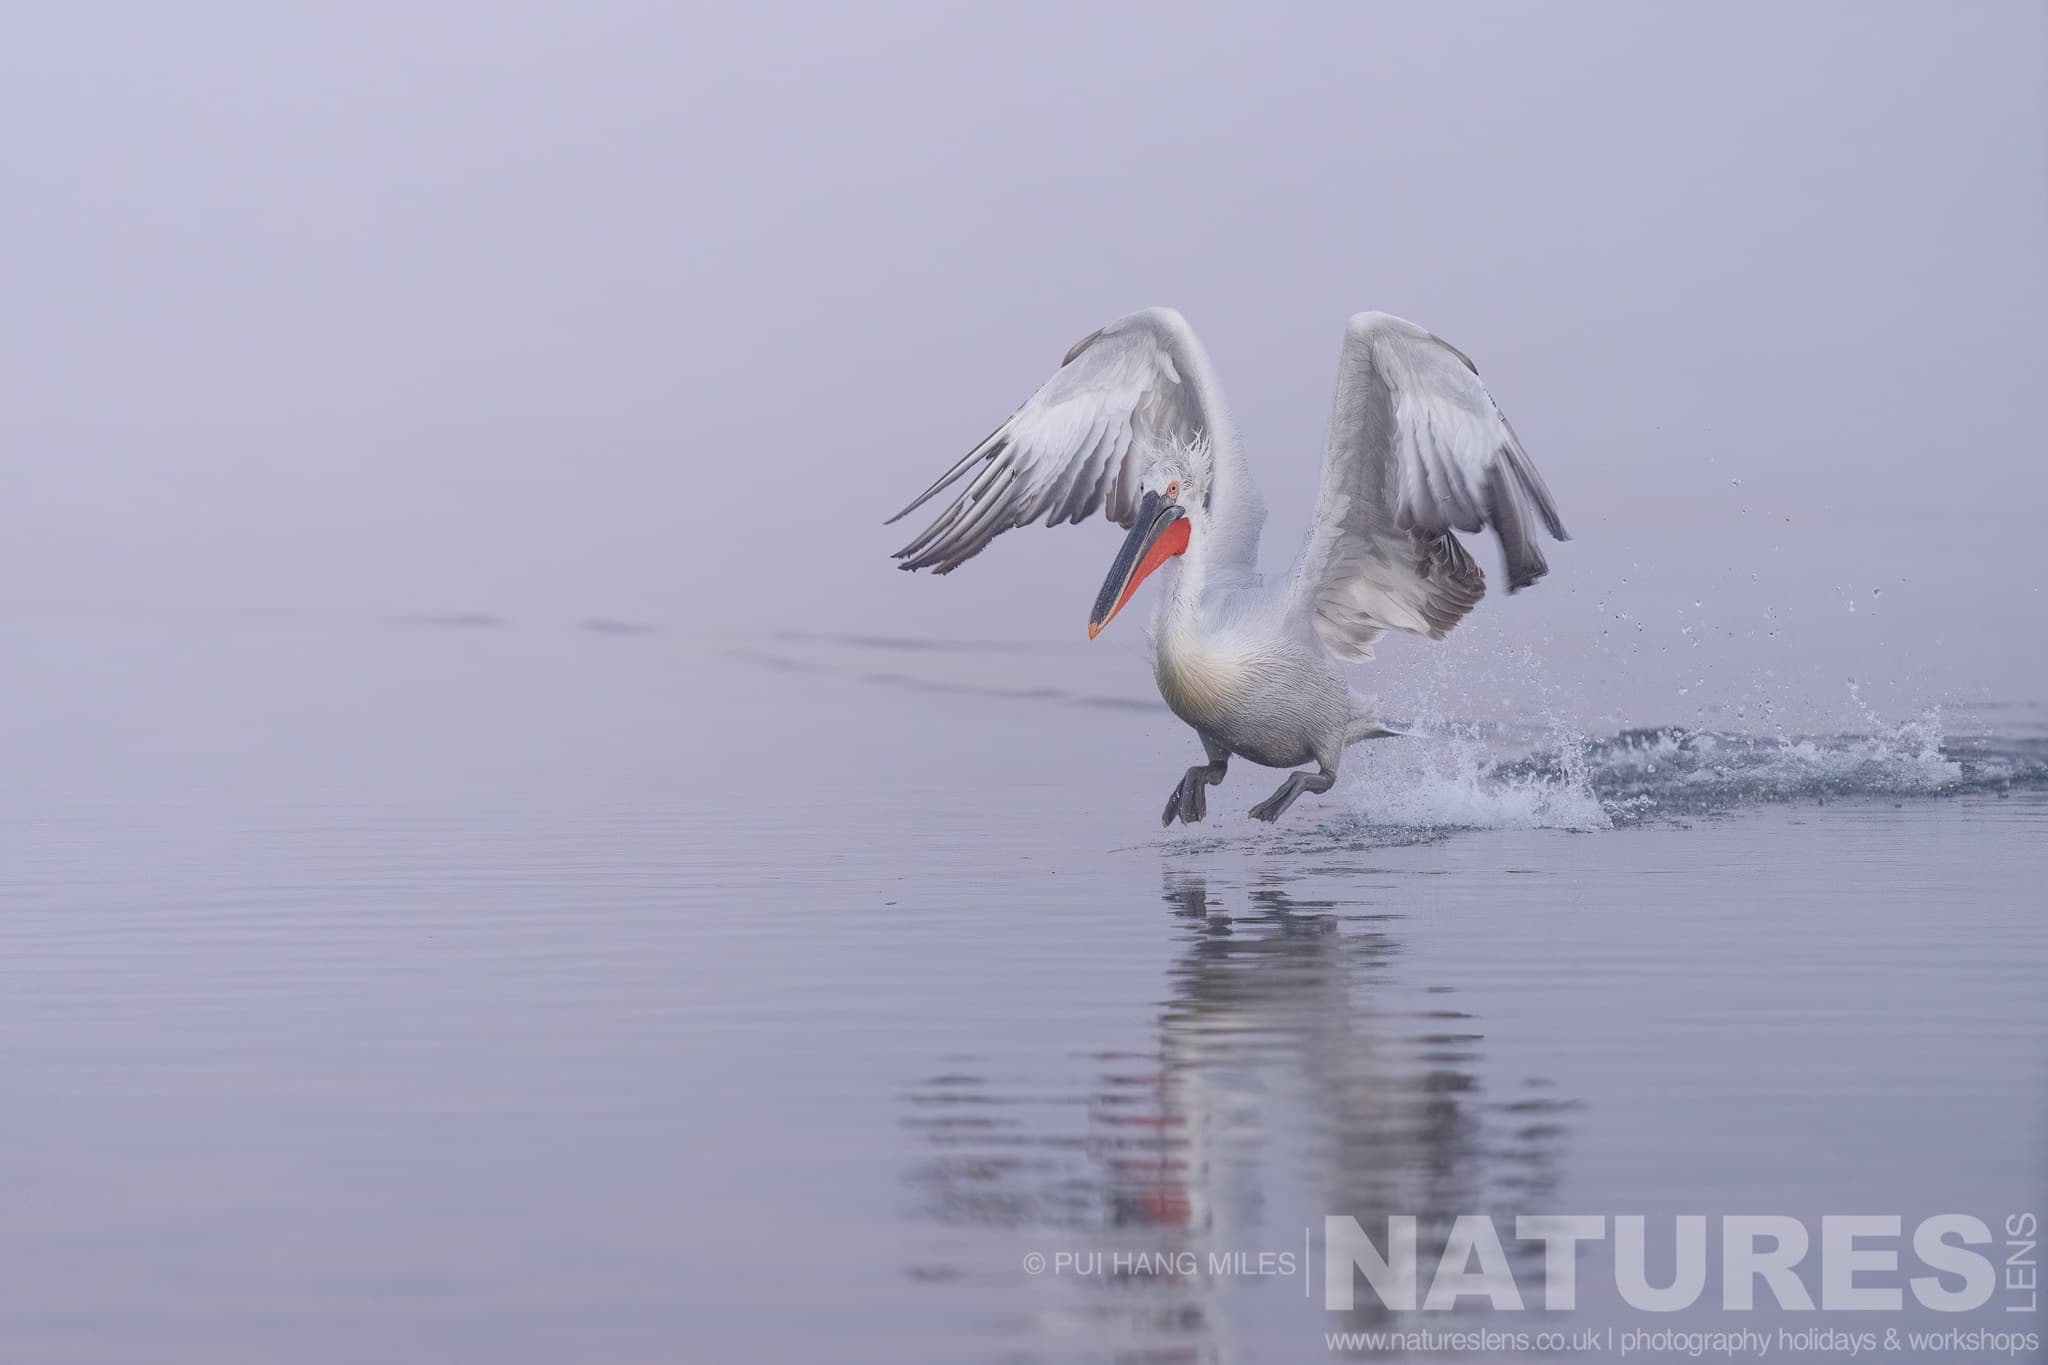 One Of The Pelicans Of Lake Kerkini Landing On The Waters Of Lake Kerkini